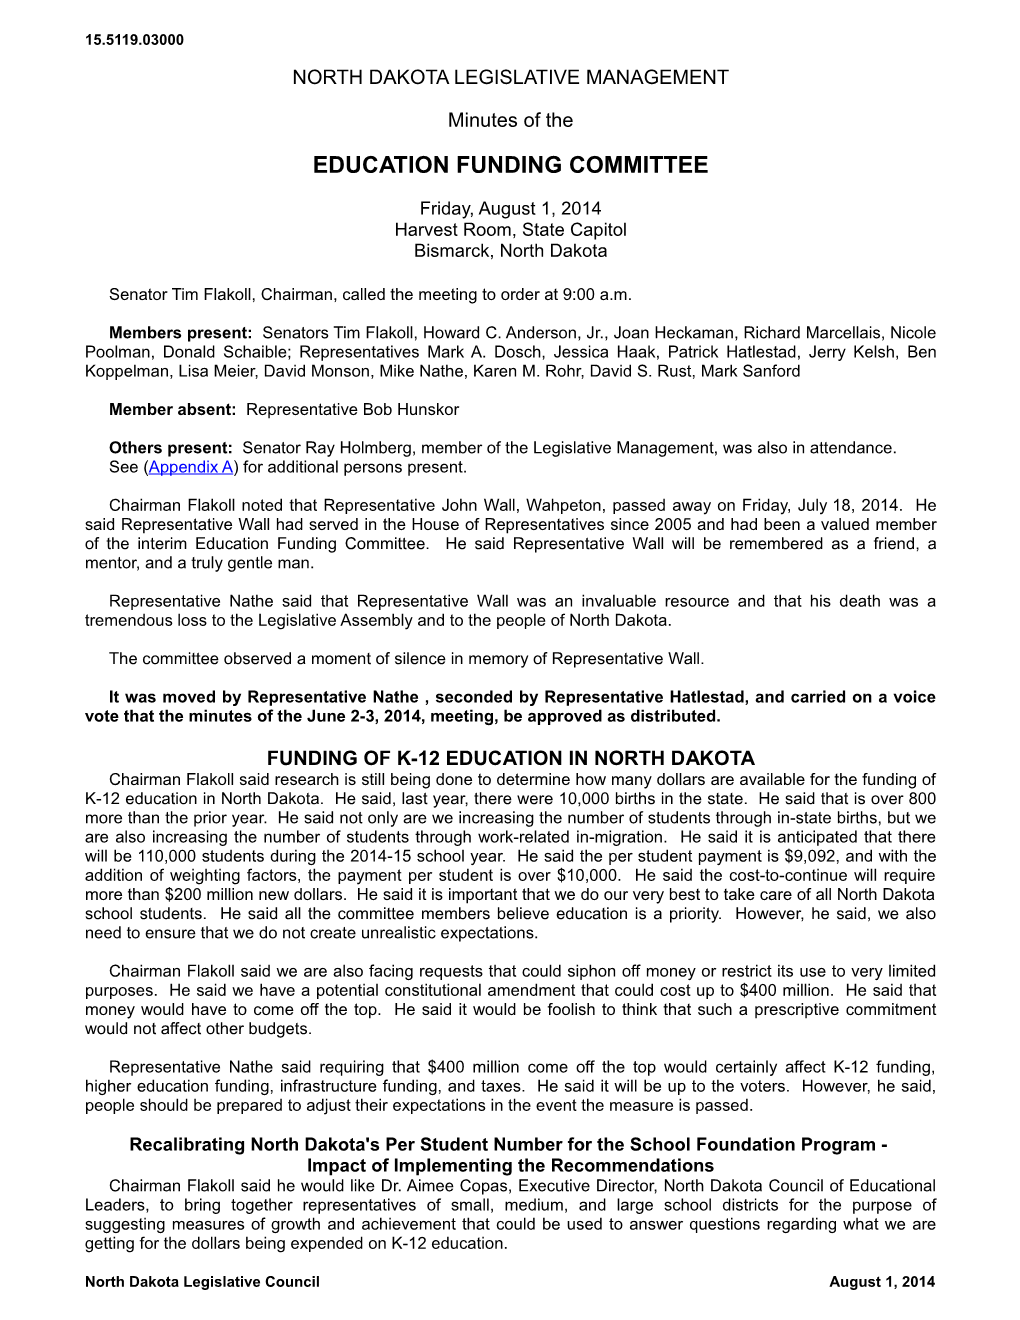 Education Funding Committee